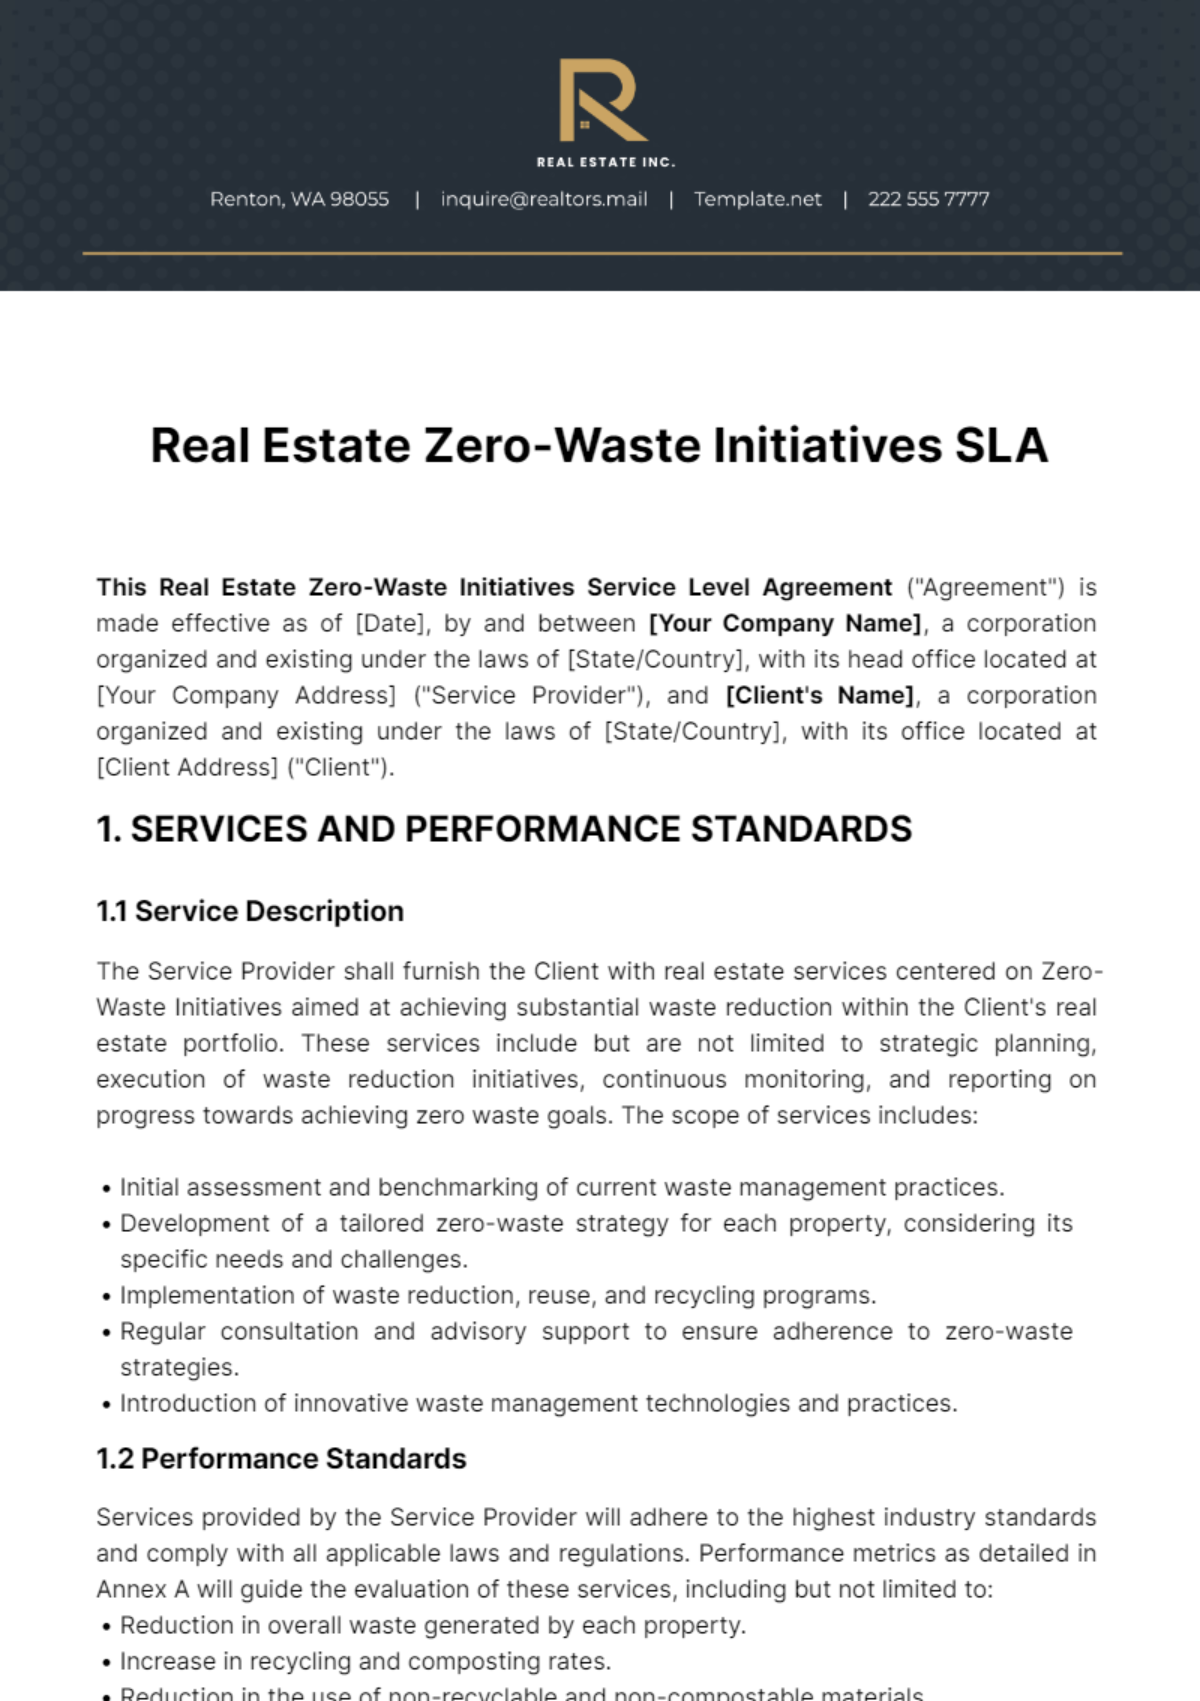 Real Estate Zero-Waste Initiatives SLA Template